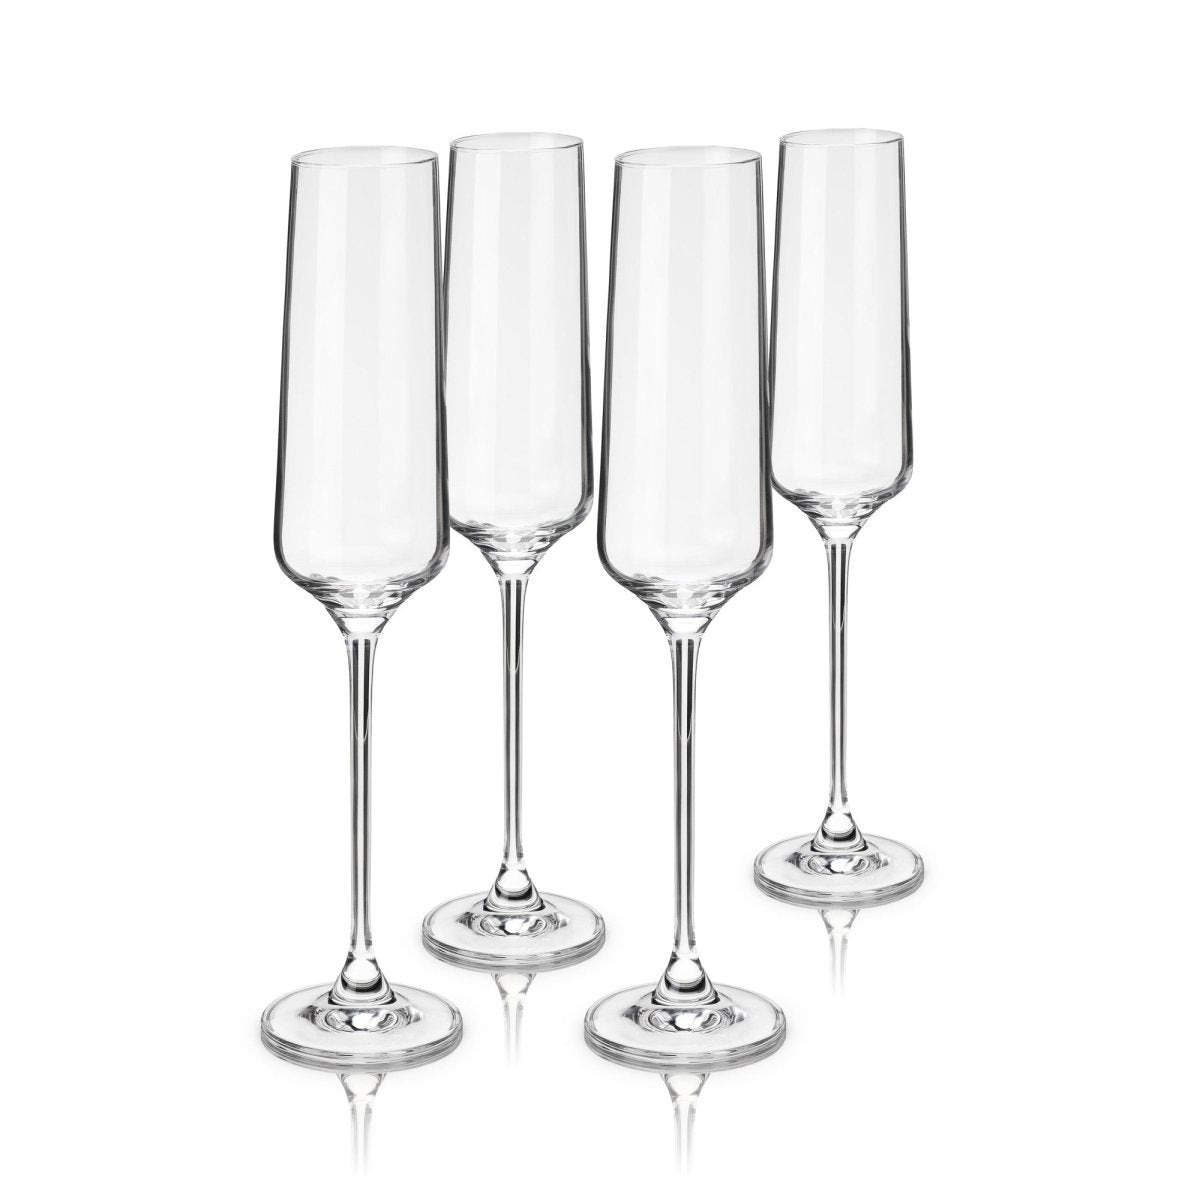 Genoa 12 oz. Lead-Free Crystal Champagne Flutes (Set of 4)